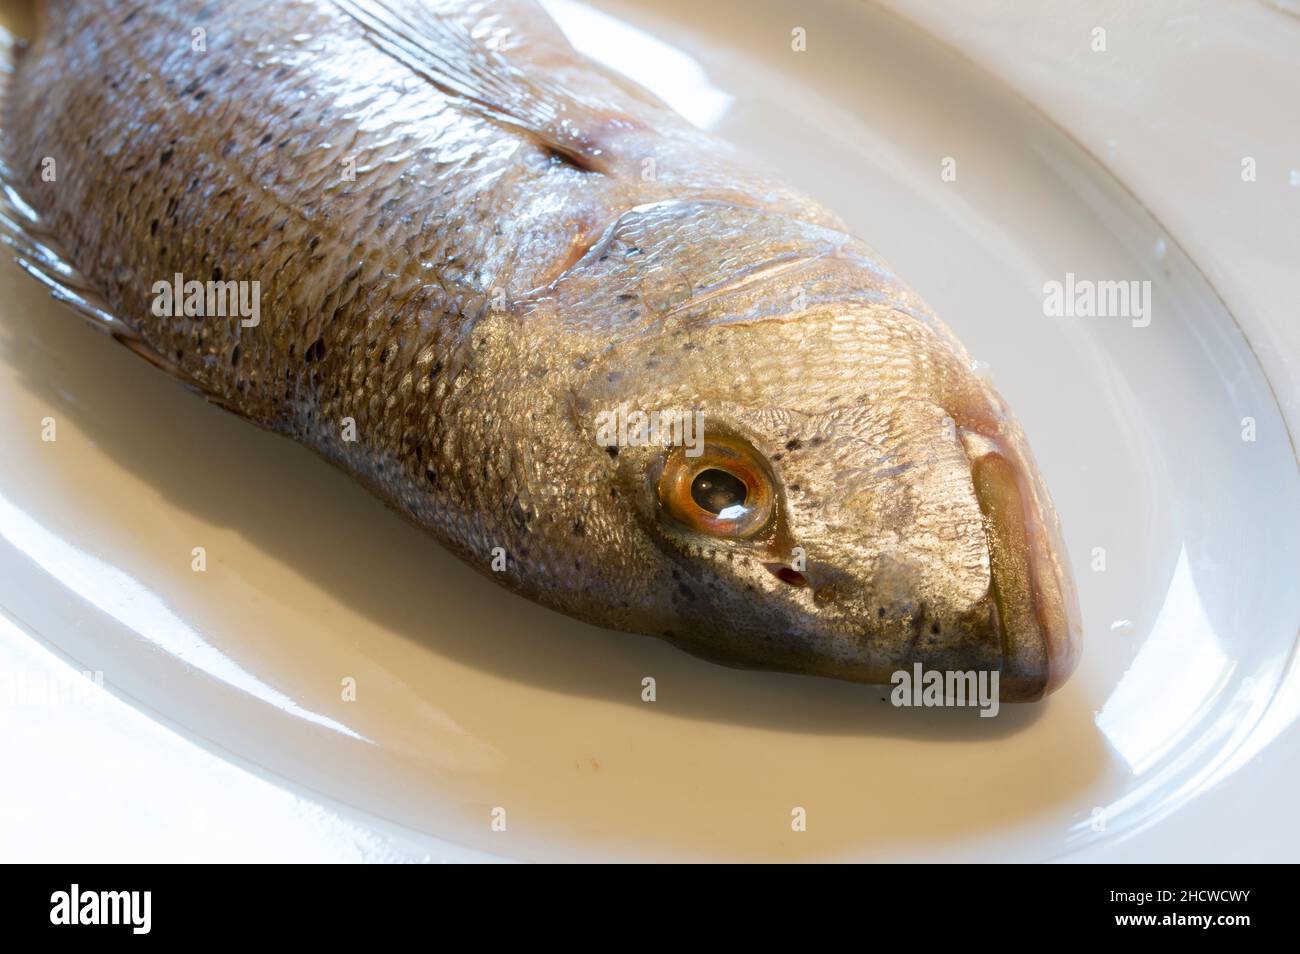 Raw saltwater fish Dentex Dentex, common dentex on a white plate, raw seafood from Adriatic sea, Dalmatian cuisine Stock Photo